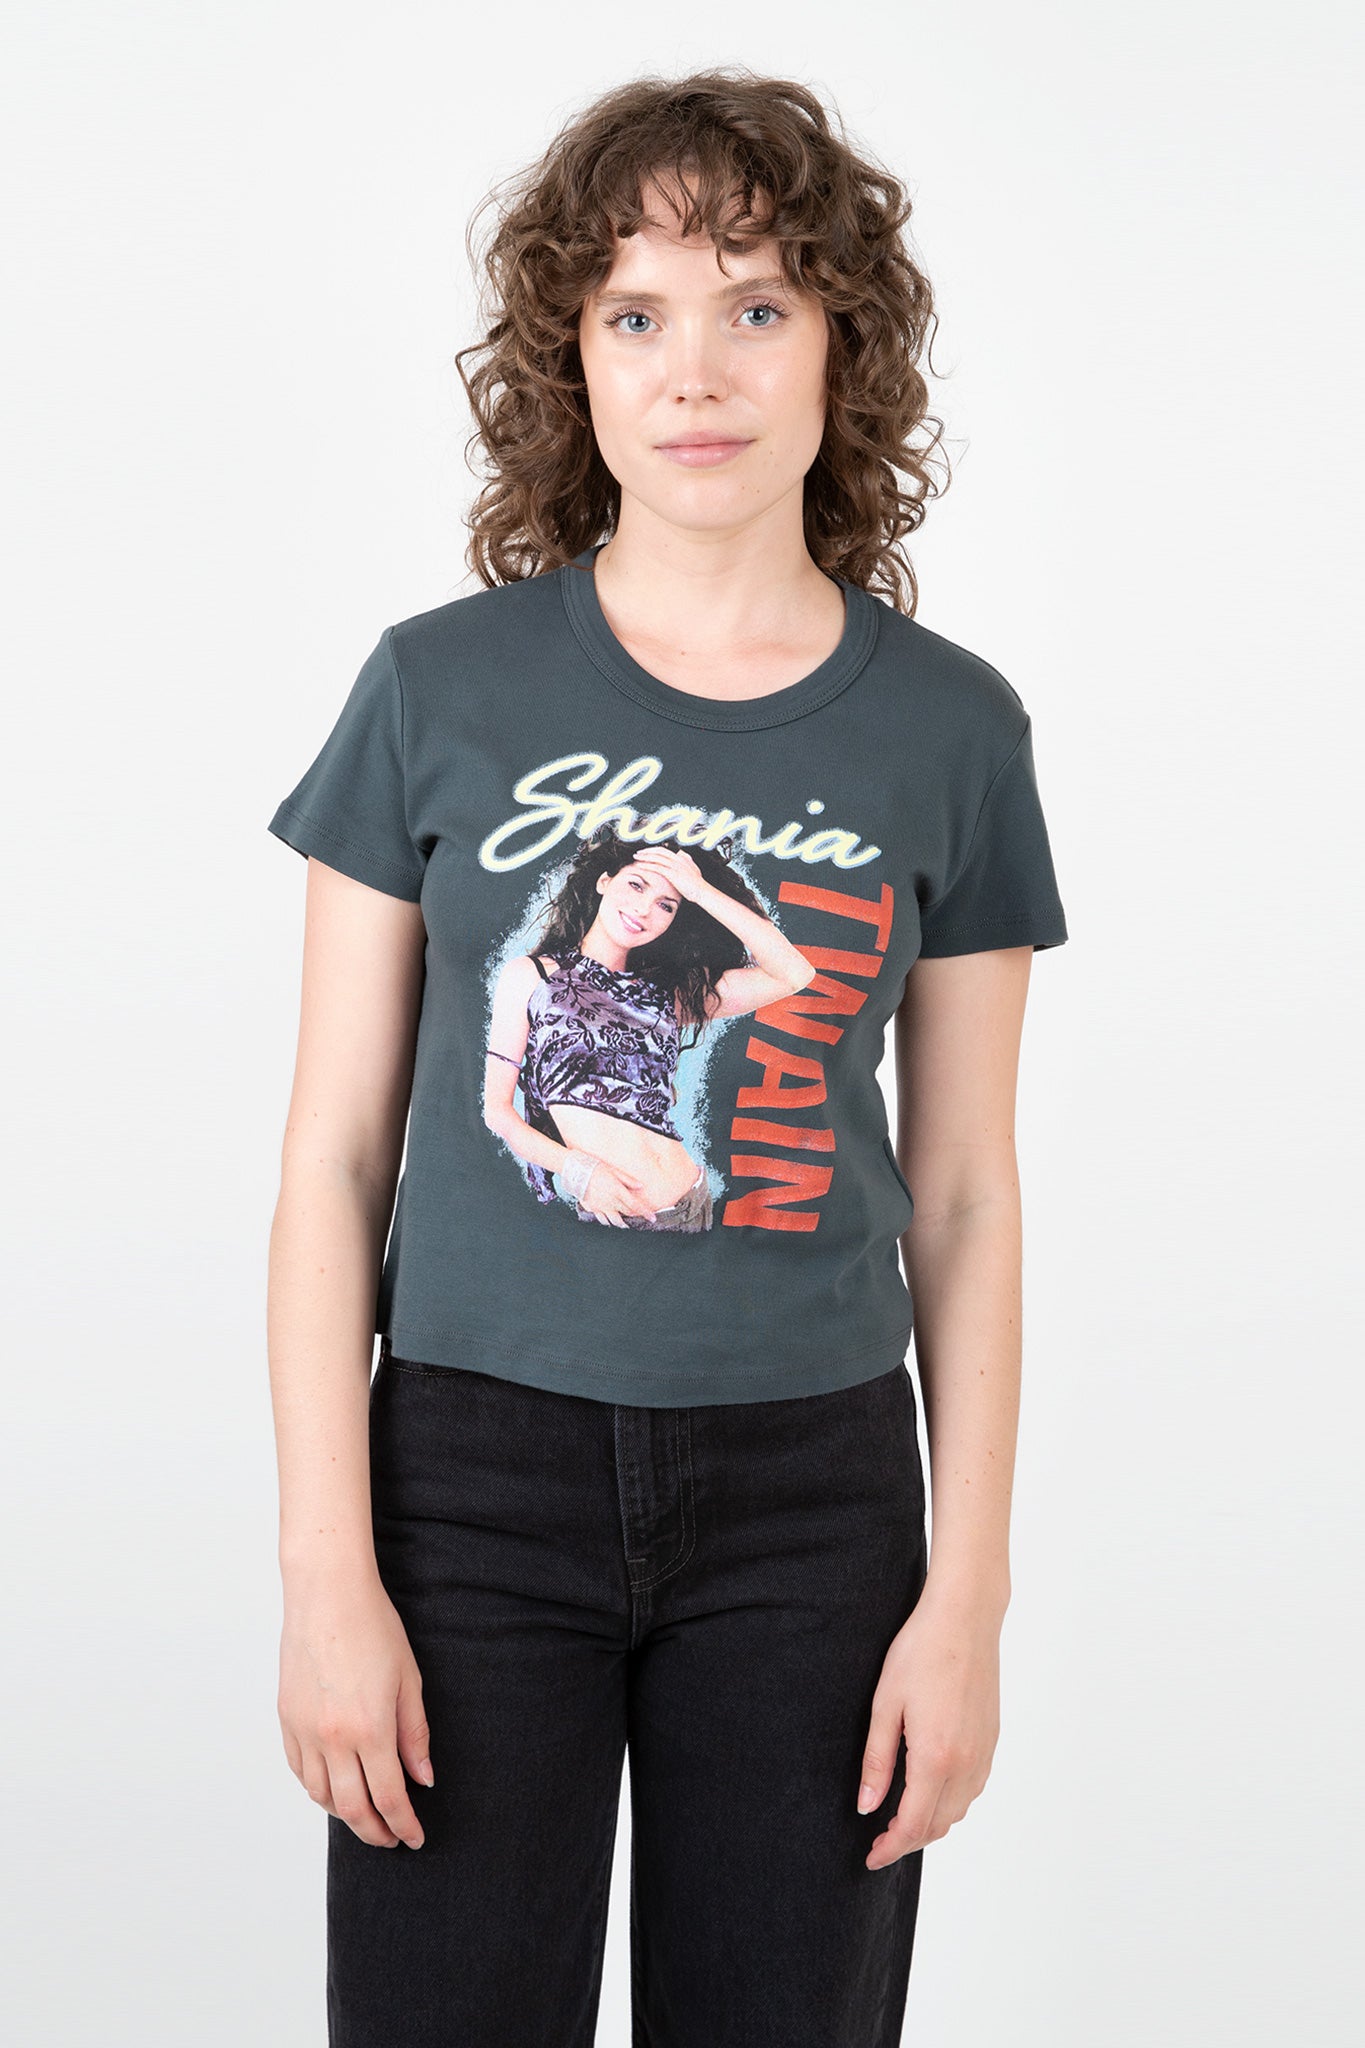 Shania Twain Up! Single Shrunken Tee T-Shirts Daydreamer   